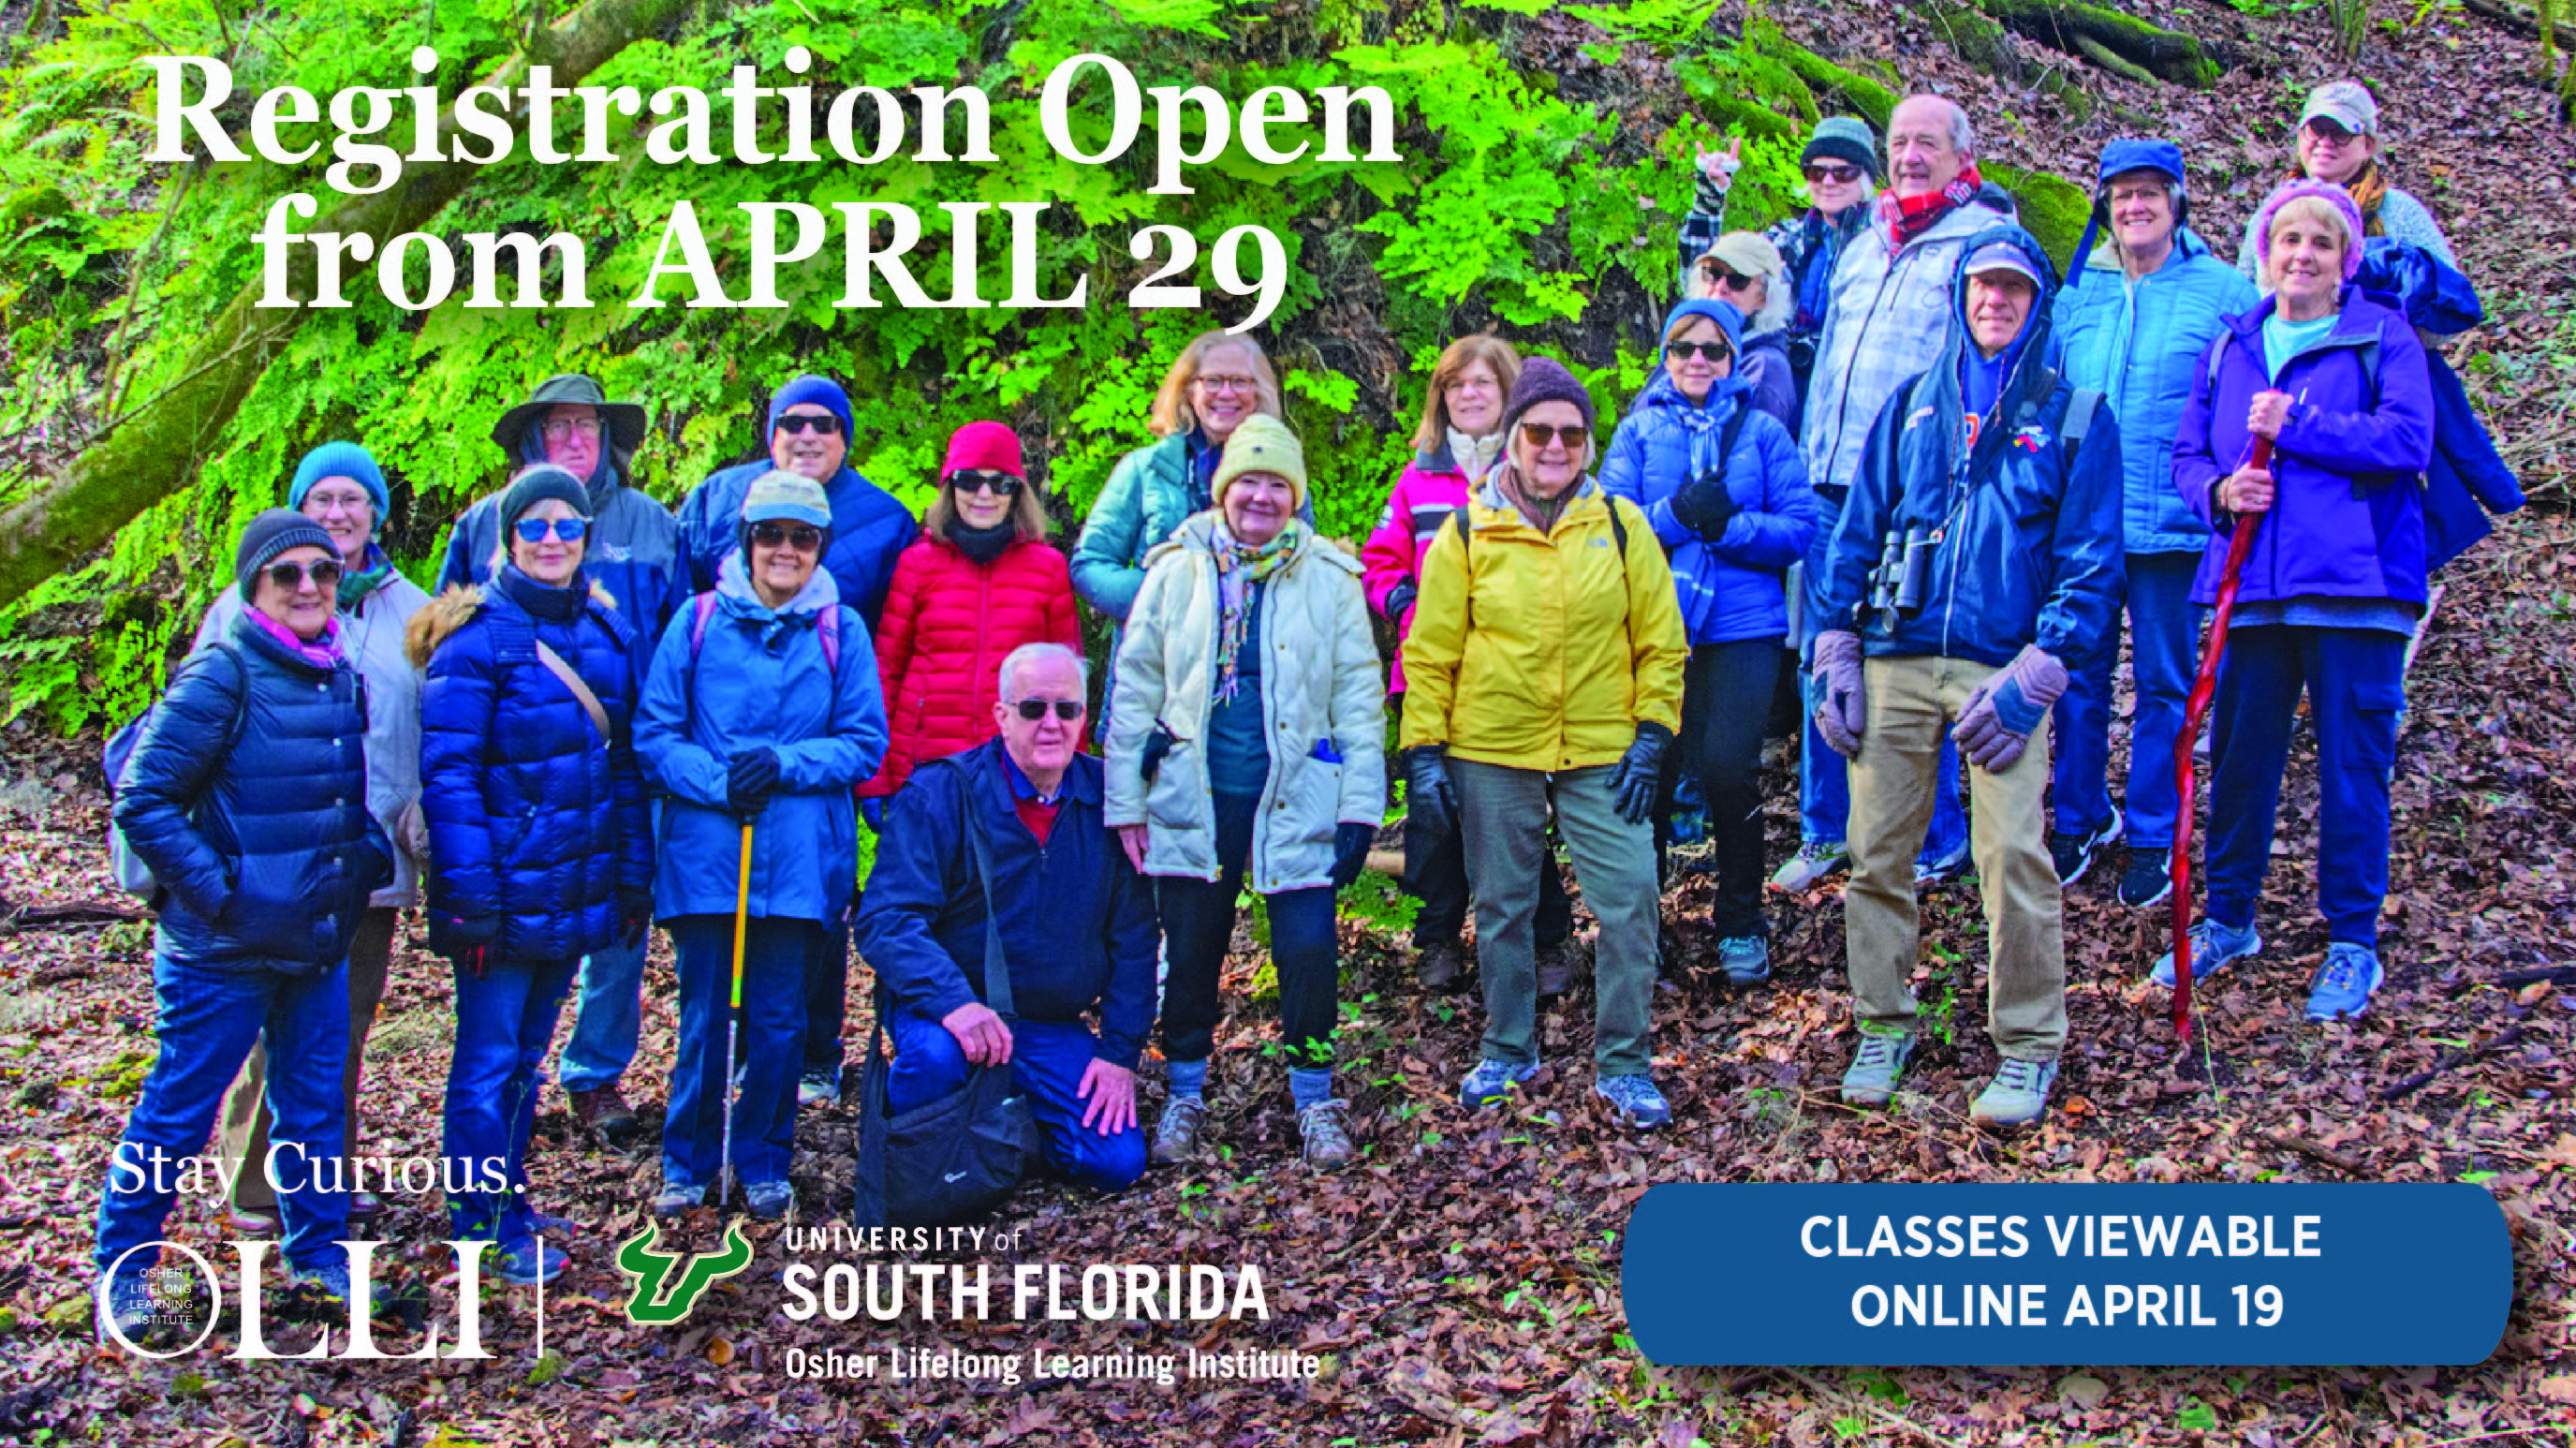 Summer registration open from April 29